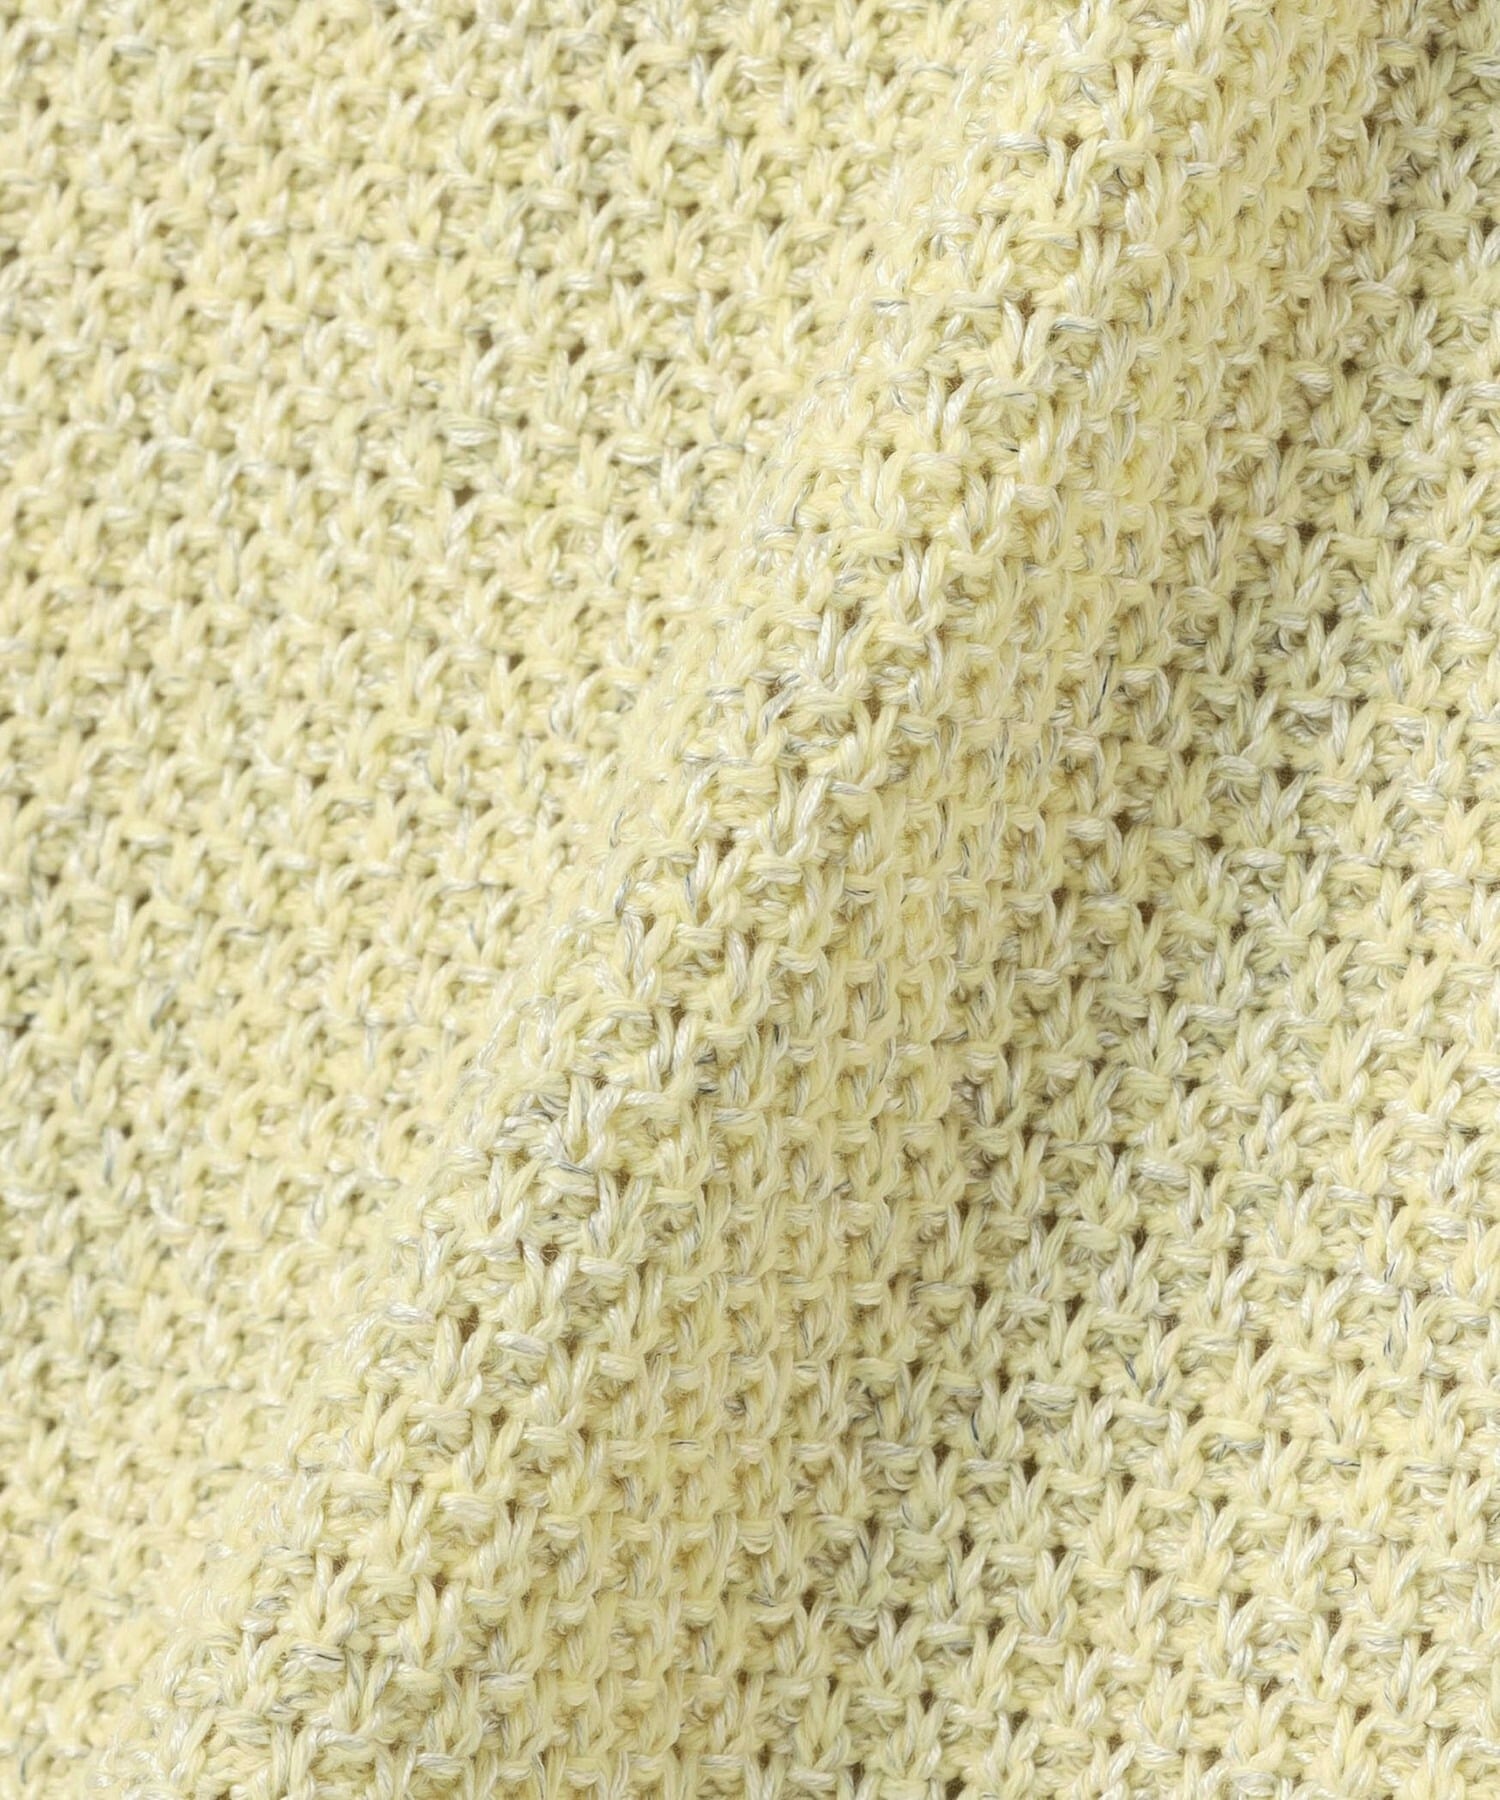 【yoshie inaba】3色杢ラーベンニットタイトスカート 詳細画像 クリーム 12